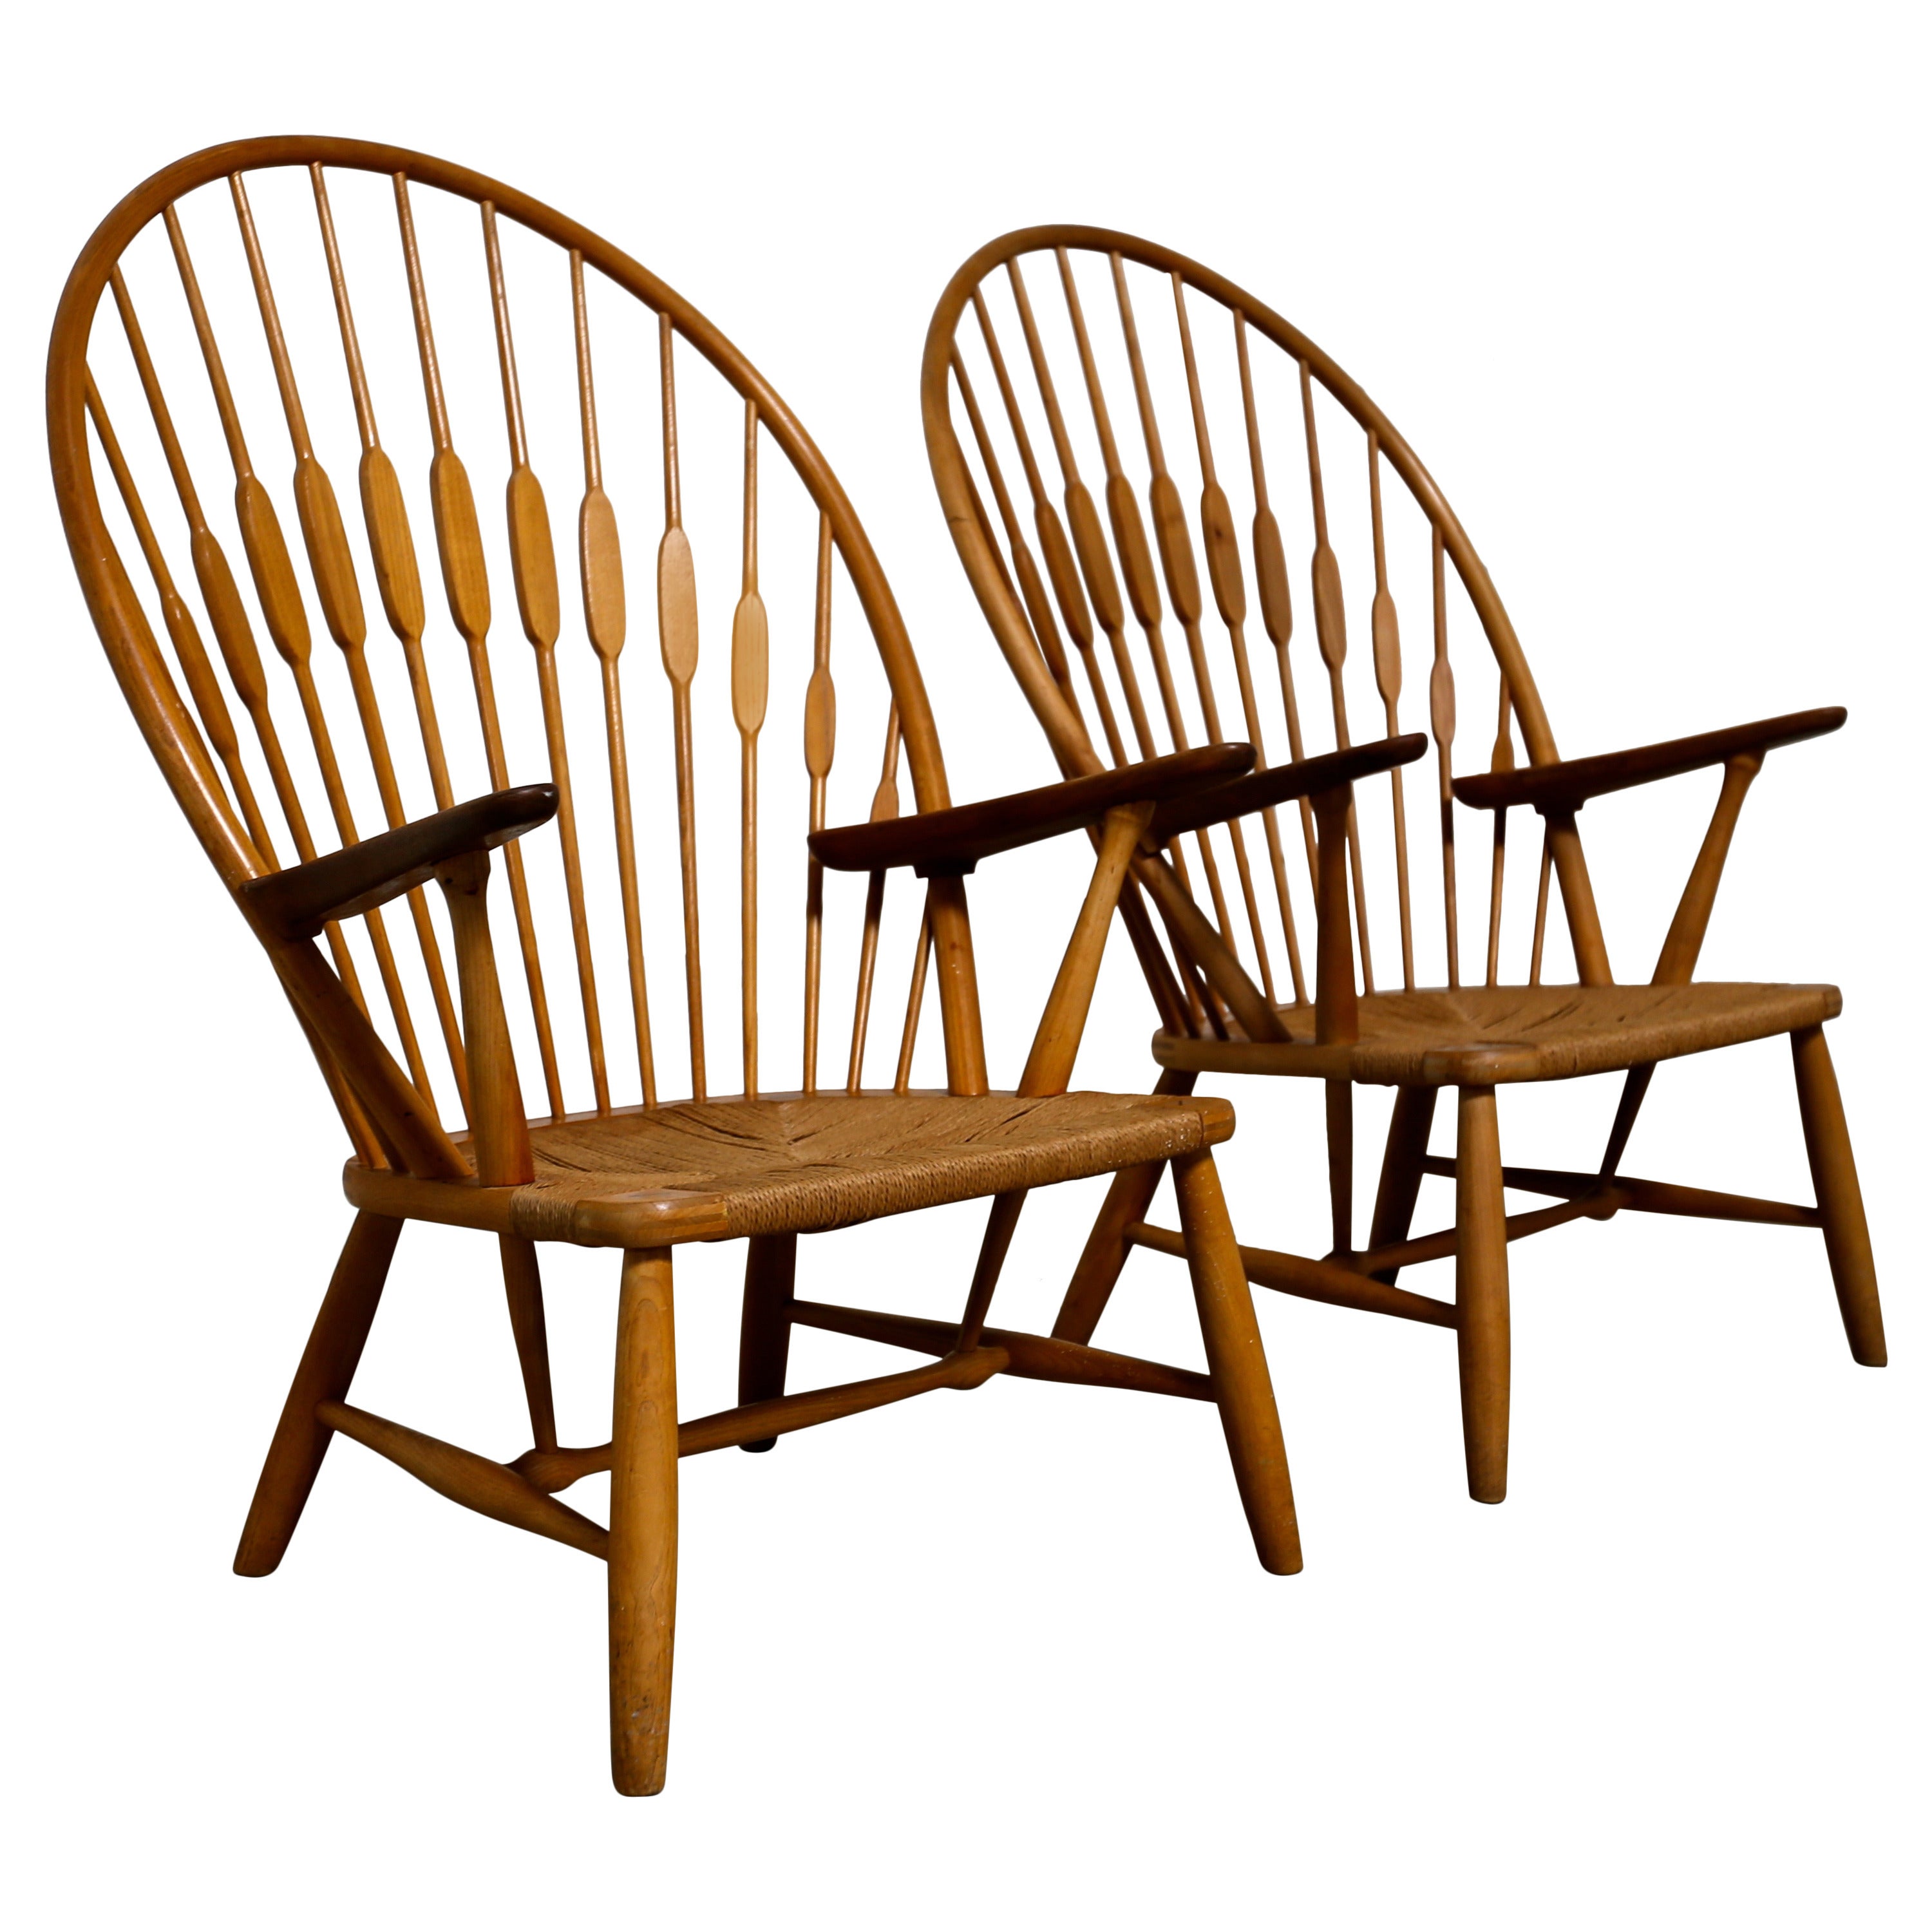 Pair of "Peacock" Chairs by Hans Wegner for Johannes Hansen